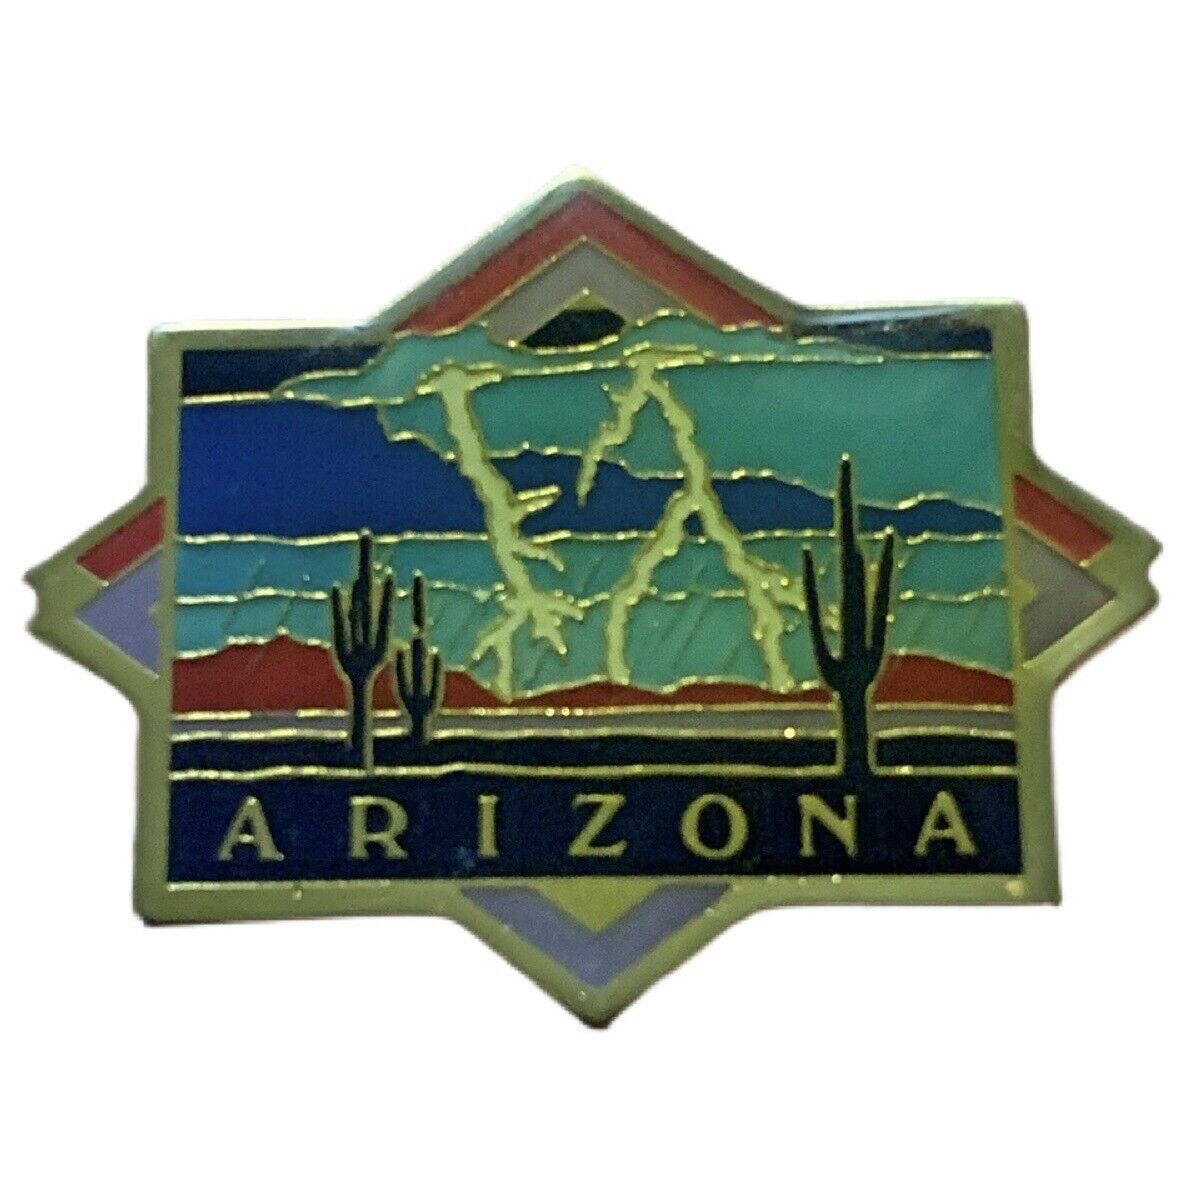 Vintage Arizona Desert Rainstorm Scenic Travel Souvenir Pin